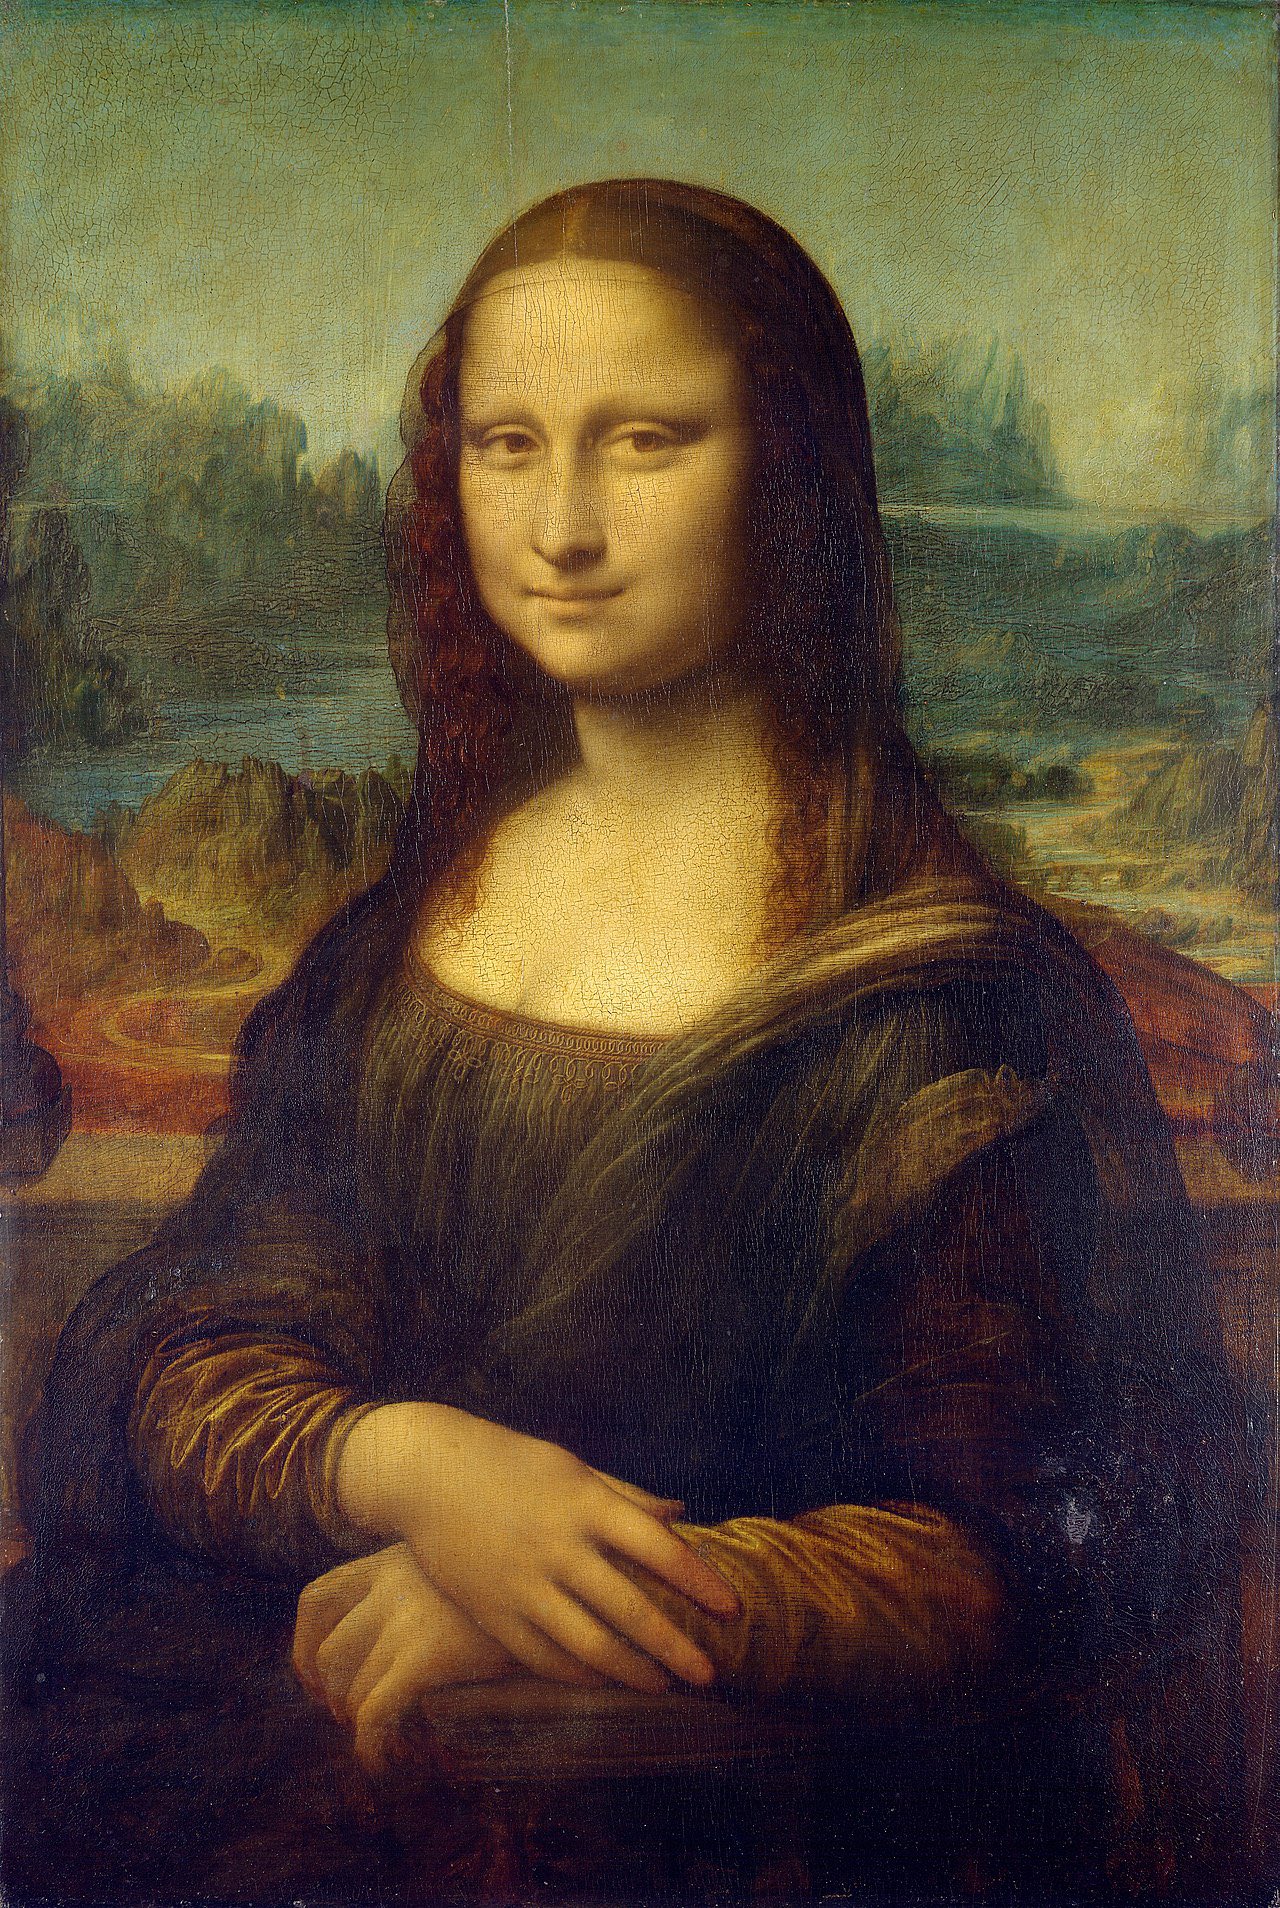 The original Mona Lisa by Leonardo Da Vinci